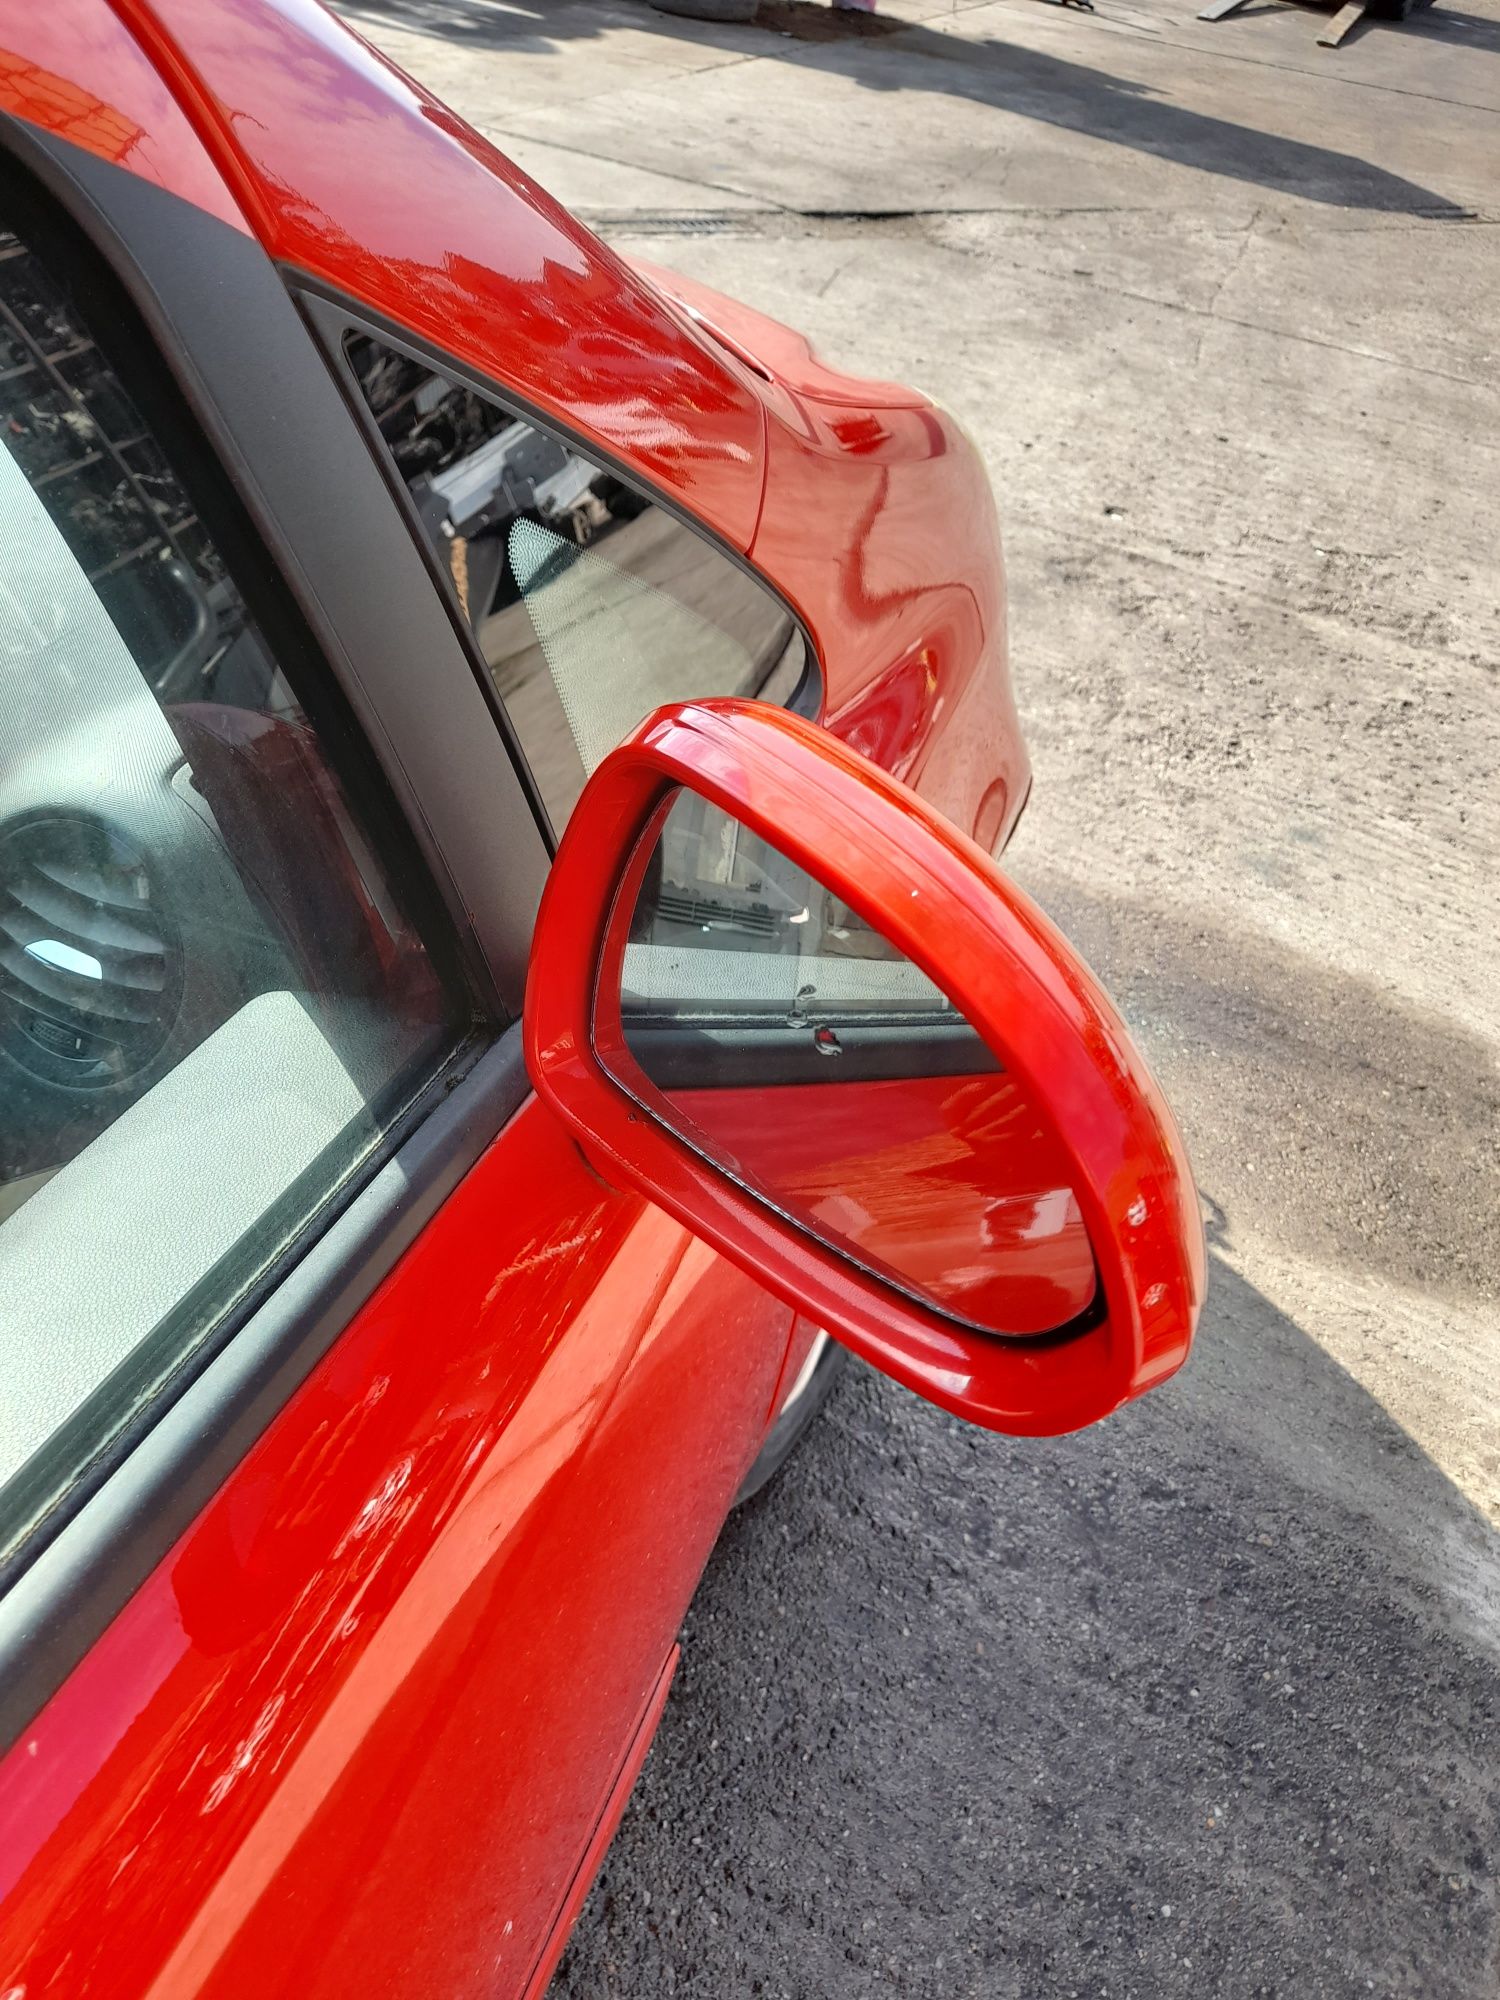 Oglinda stanga/dreapta Opel Corsa D ( 2 usi ) cod Z547 rosu